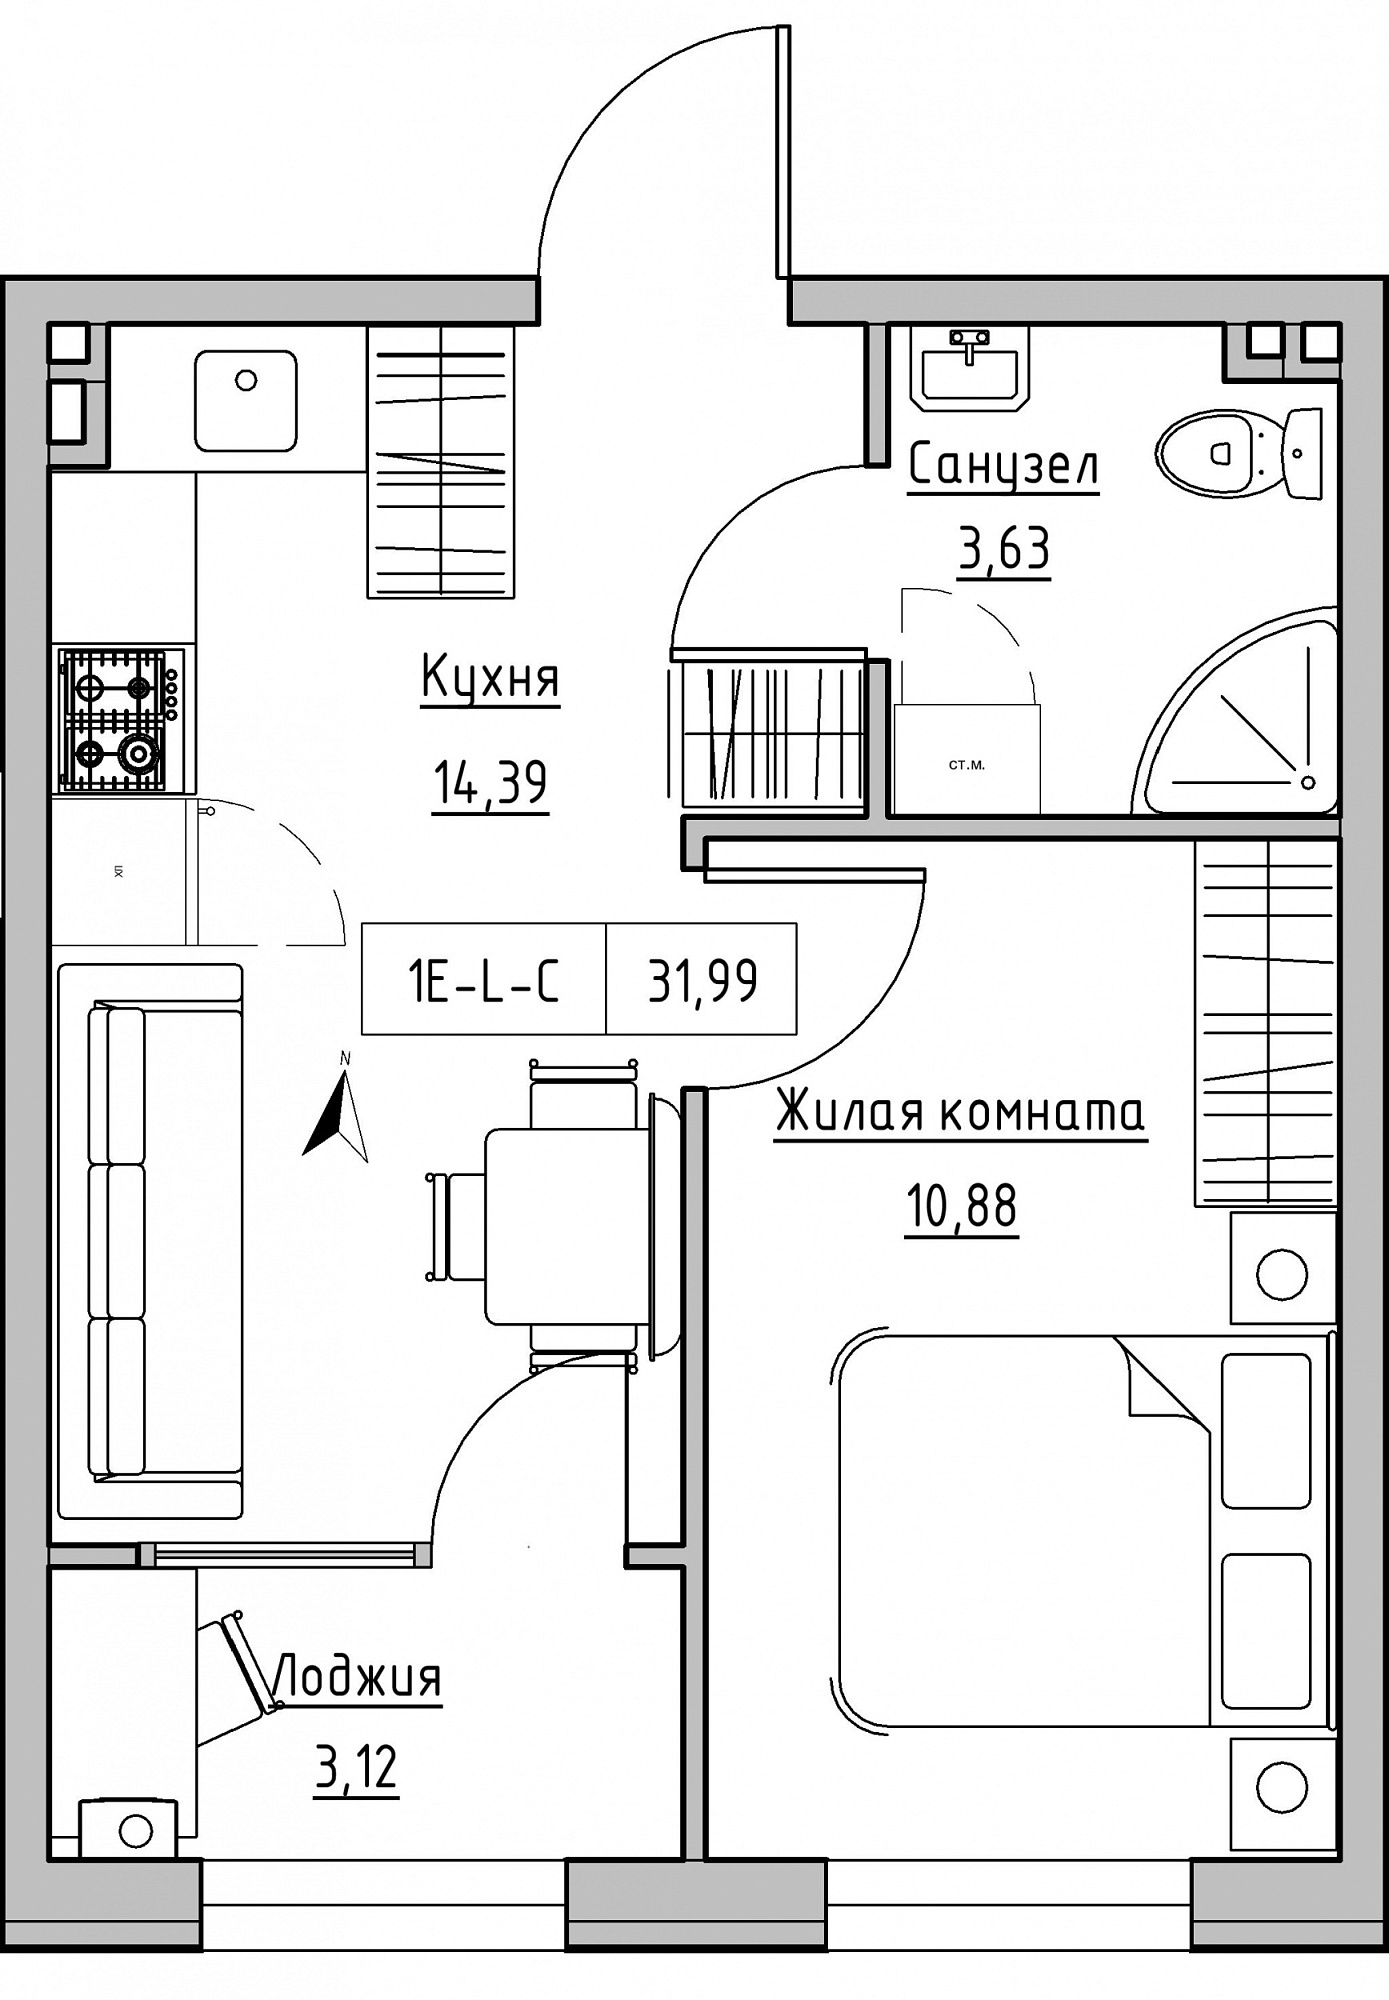 Planning 1-rm flats area 31.99m2, KS-024-01/0006.